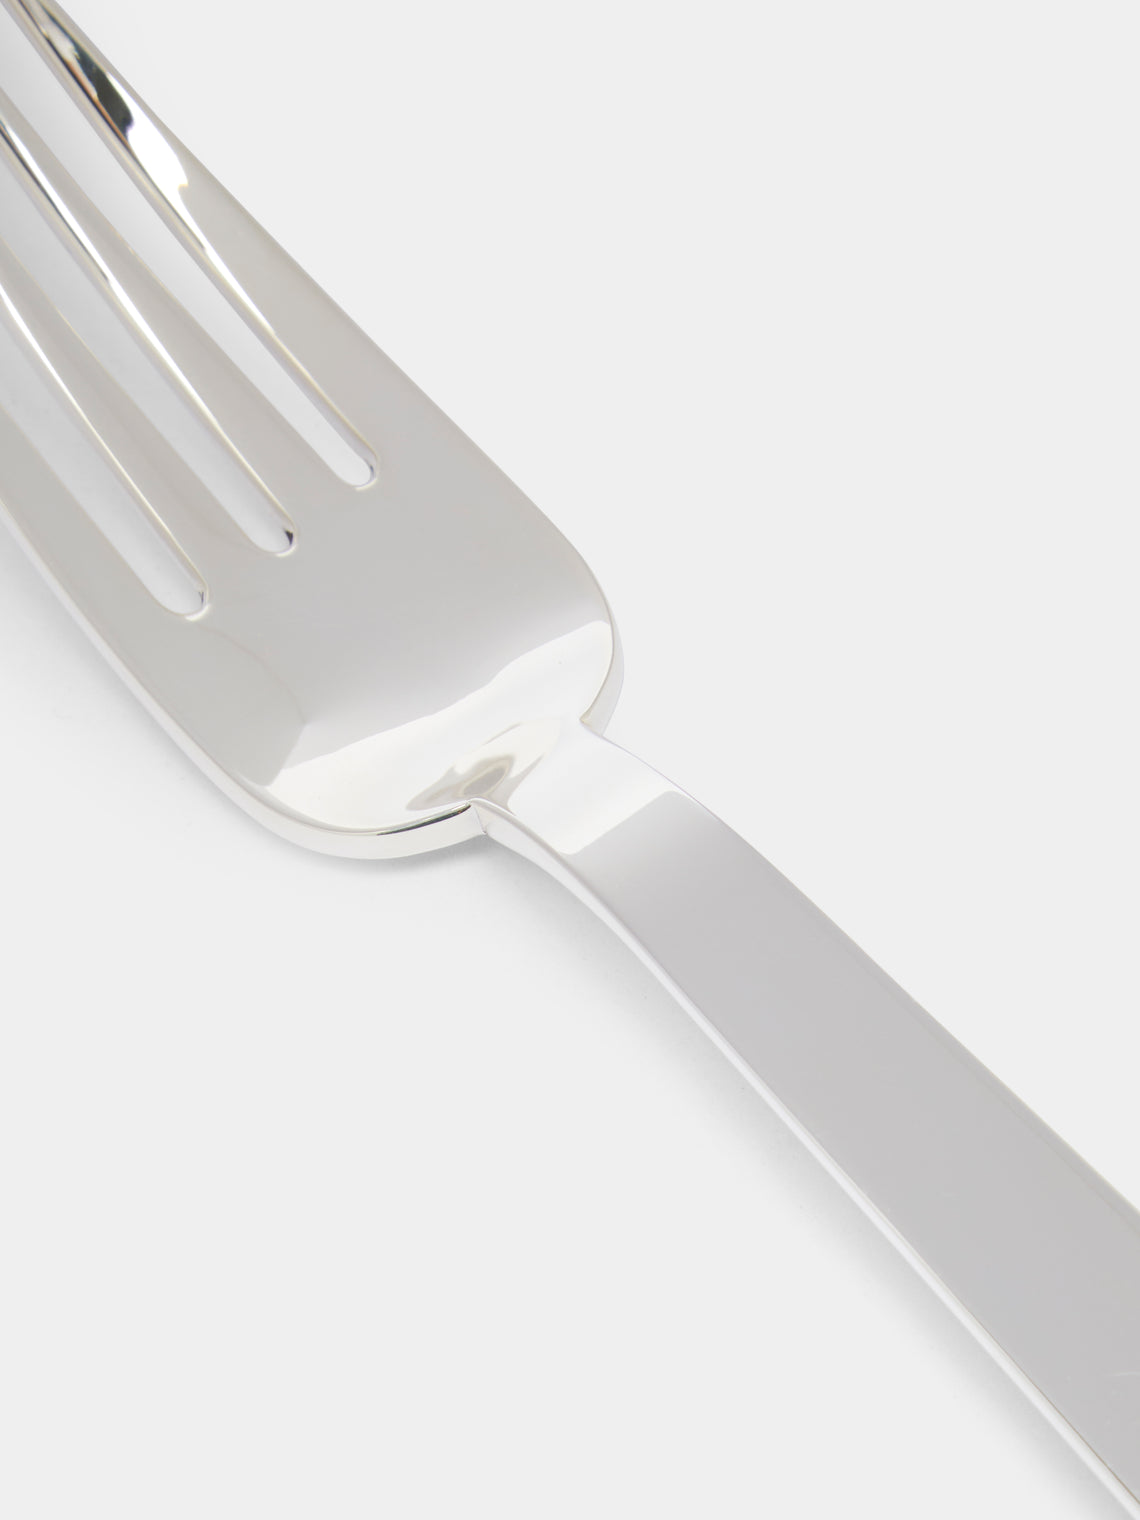 Wiener Silber Manufactur - Josef Hoffmann 135 Silver Plated Dinner Fork - Silver - ABASK